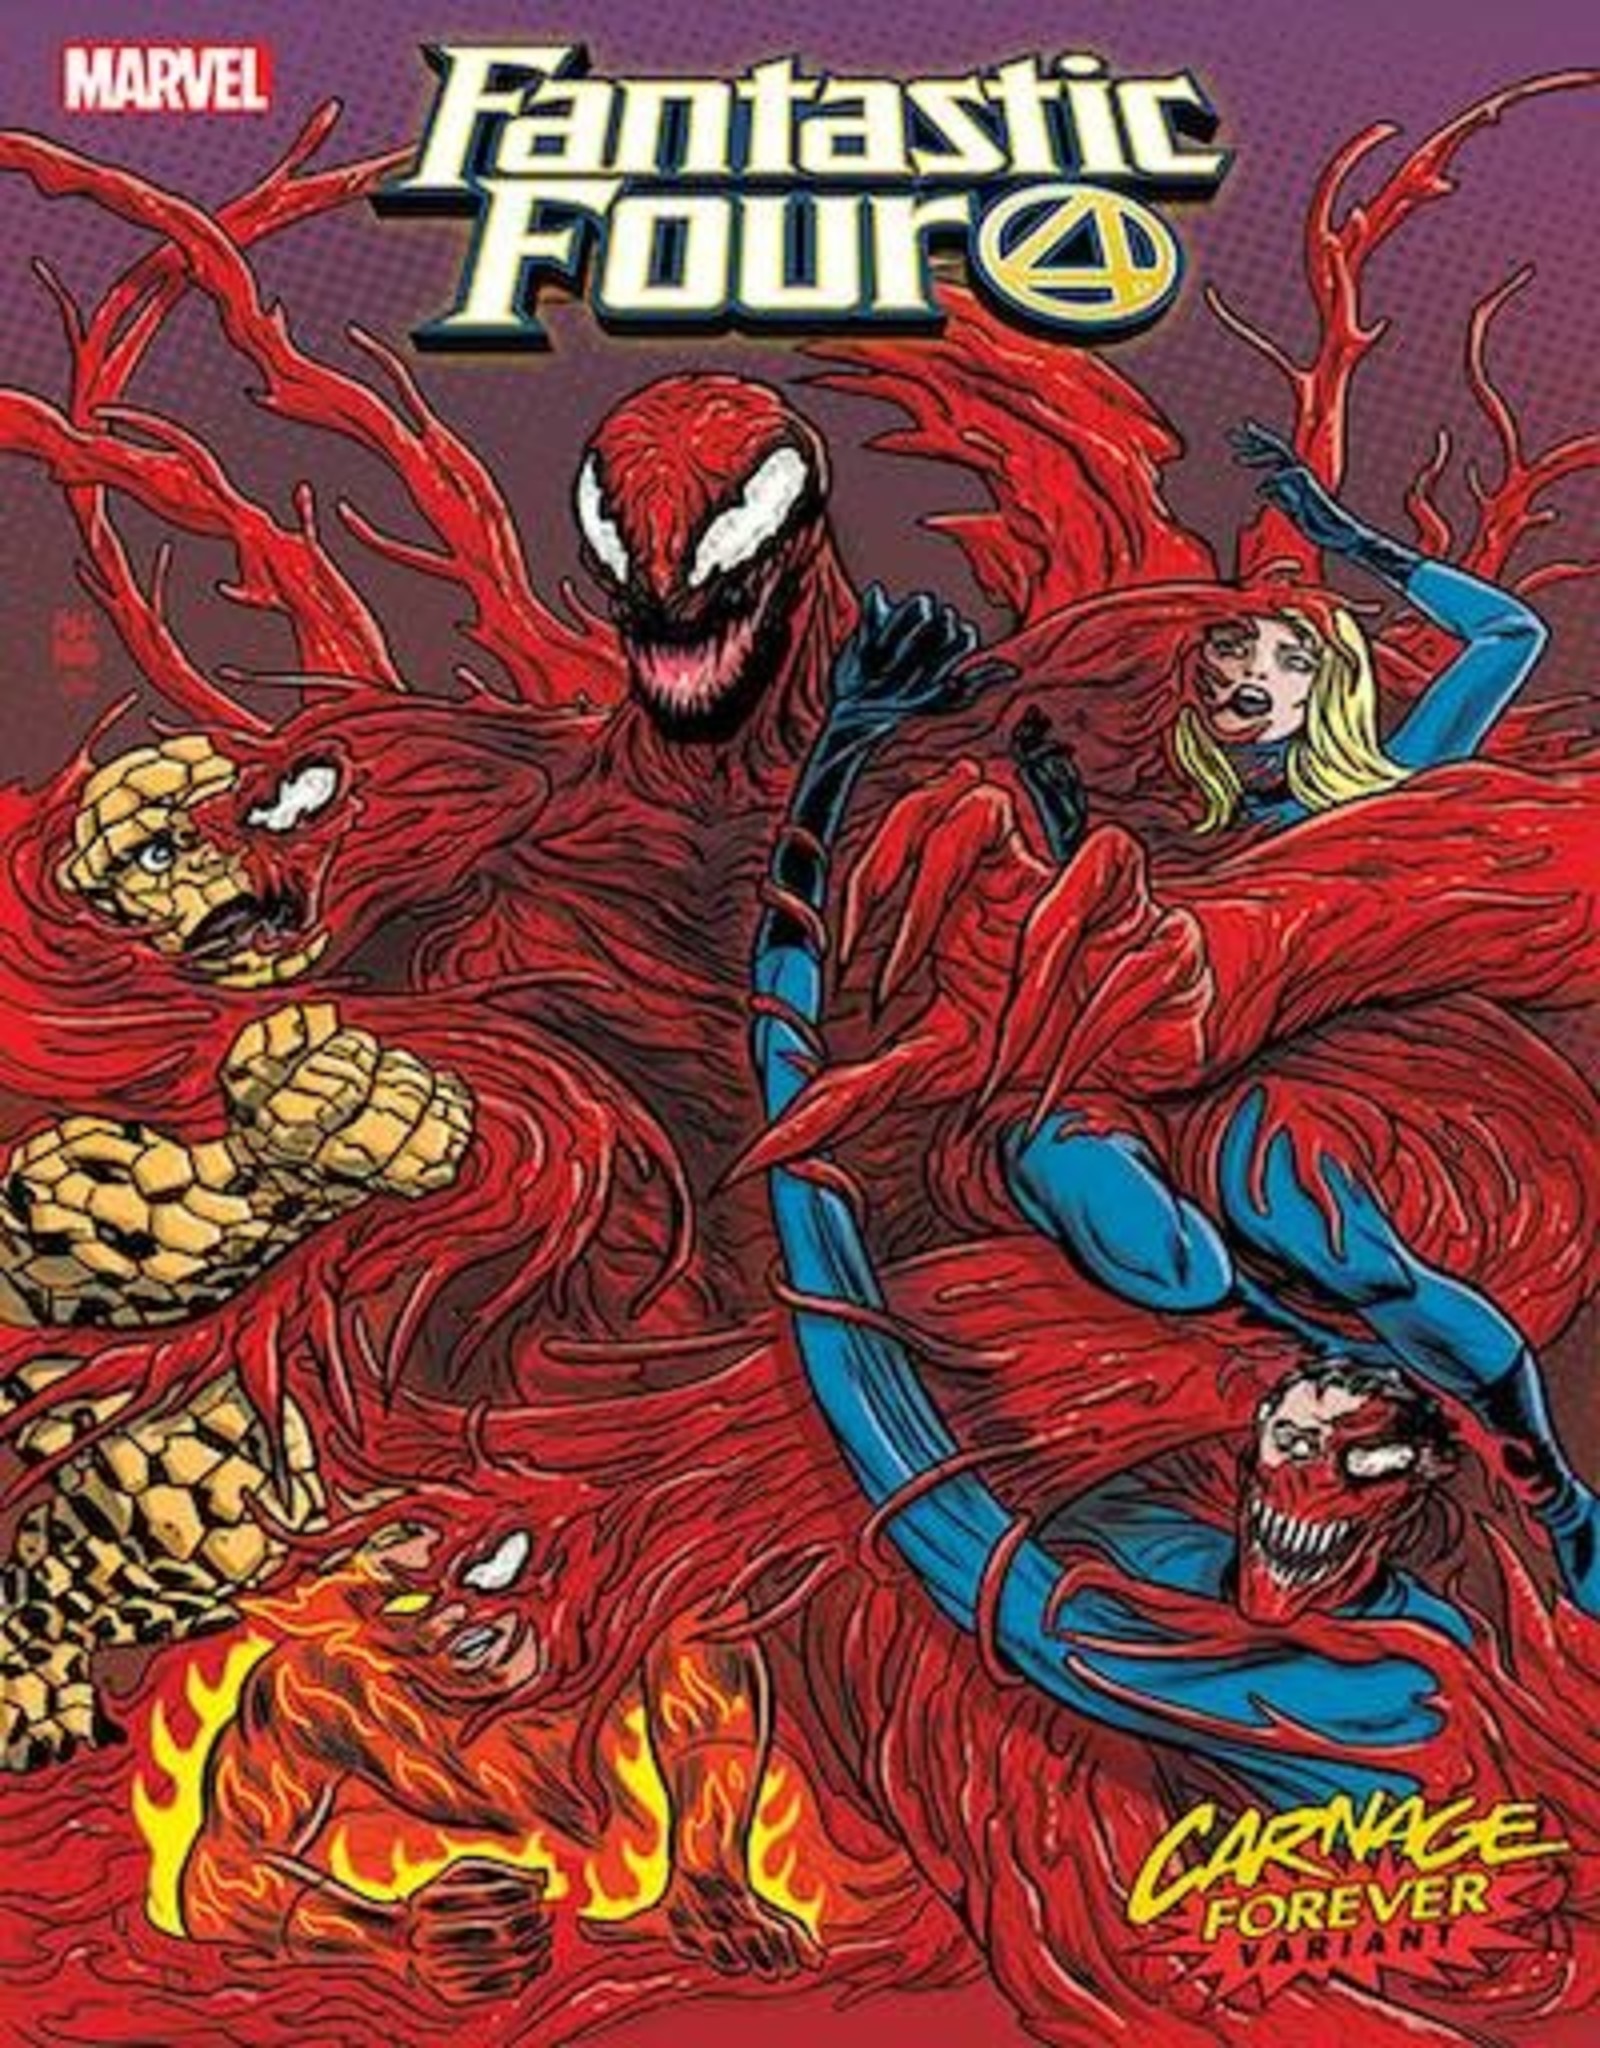 Marvel Comics Fantastic Four #42 Allred Carnage Forever Variant